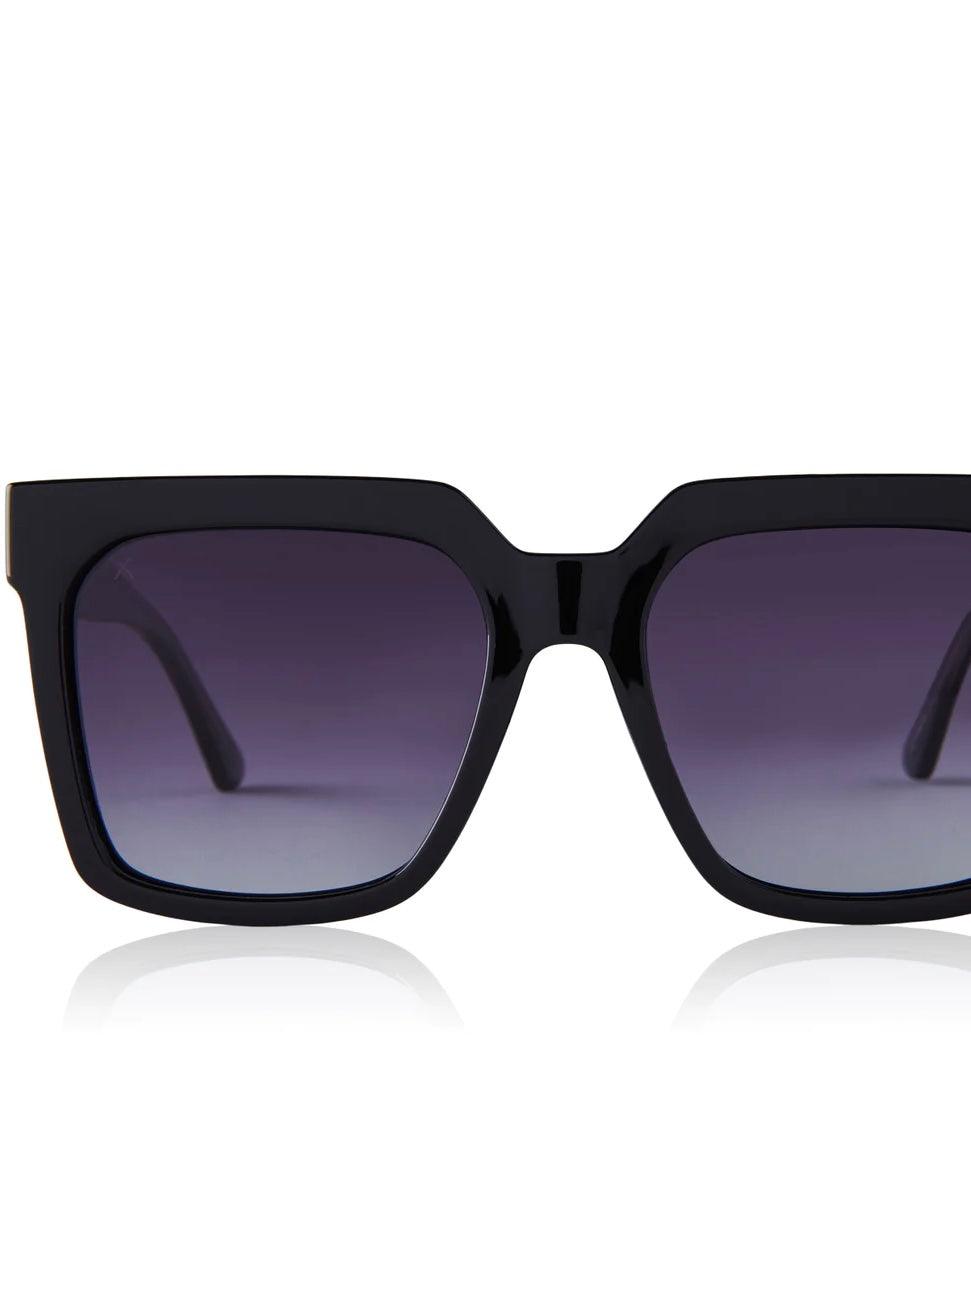 Large black sunglasses